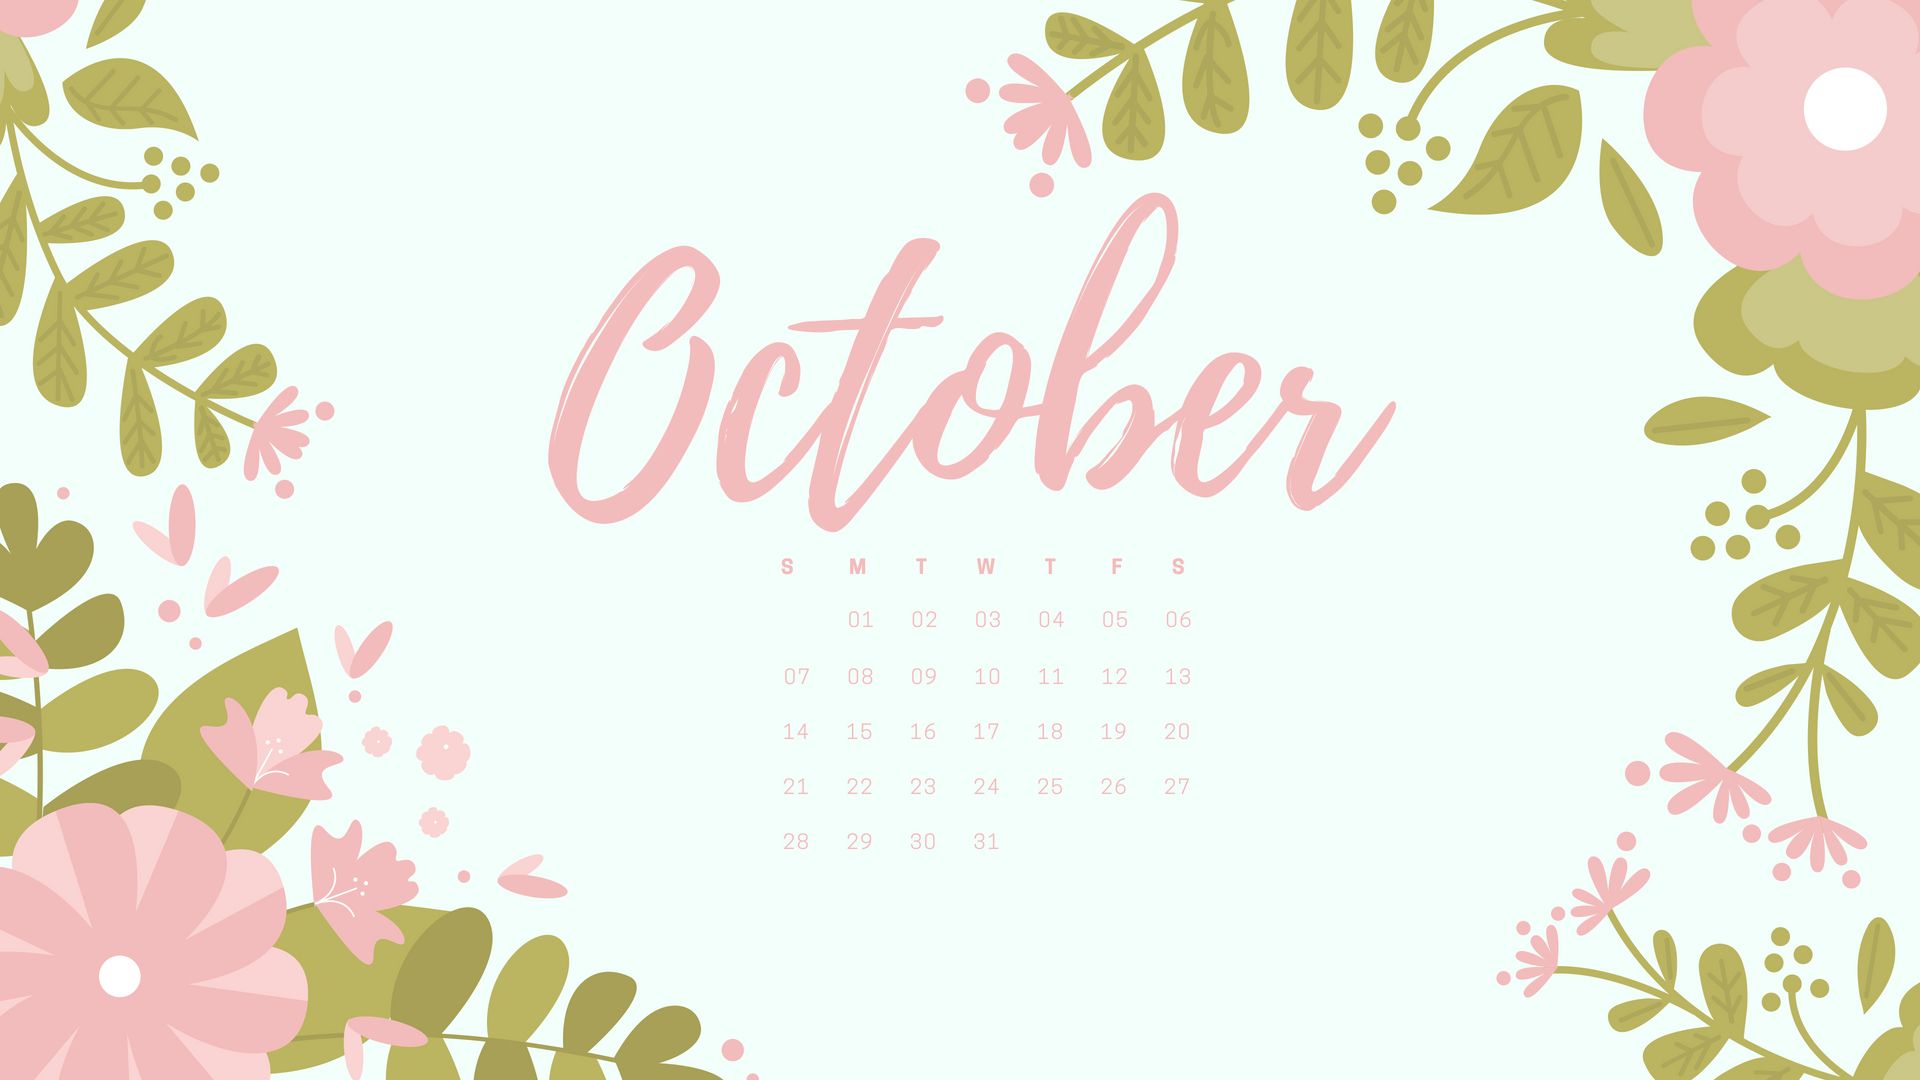 October 2018 Calendar Wallpaper - October 2018 Wallpaper Calendar - HD Wallpaper 